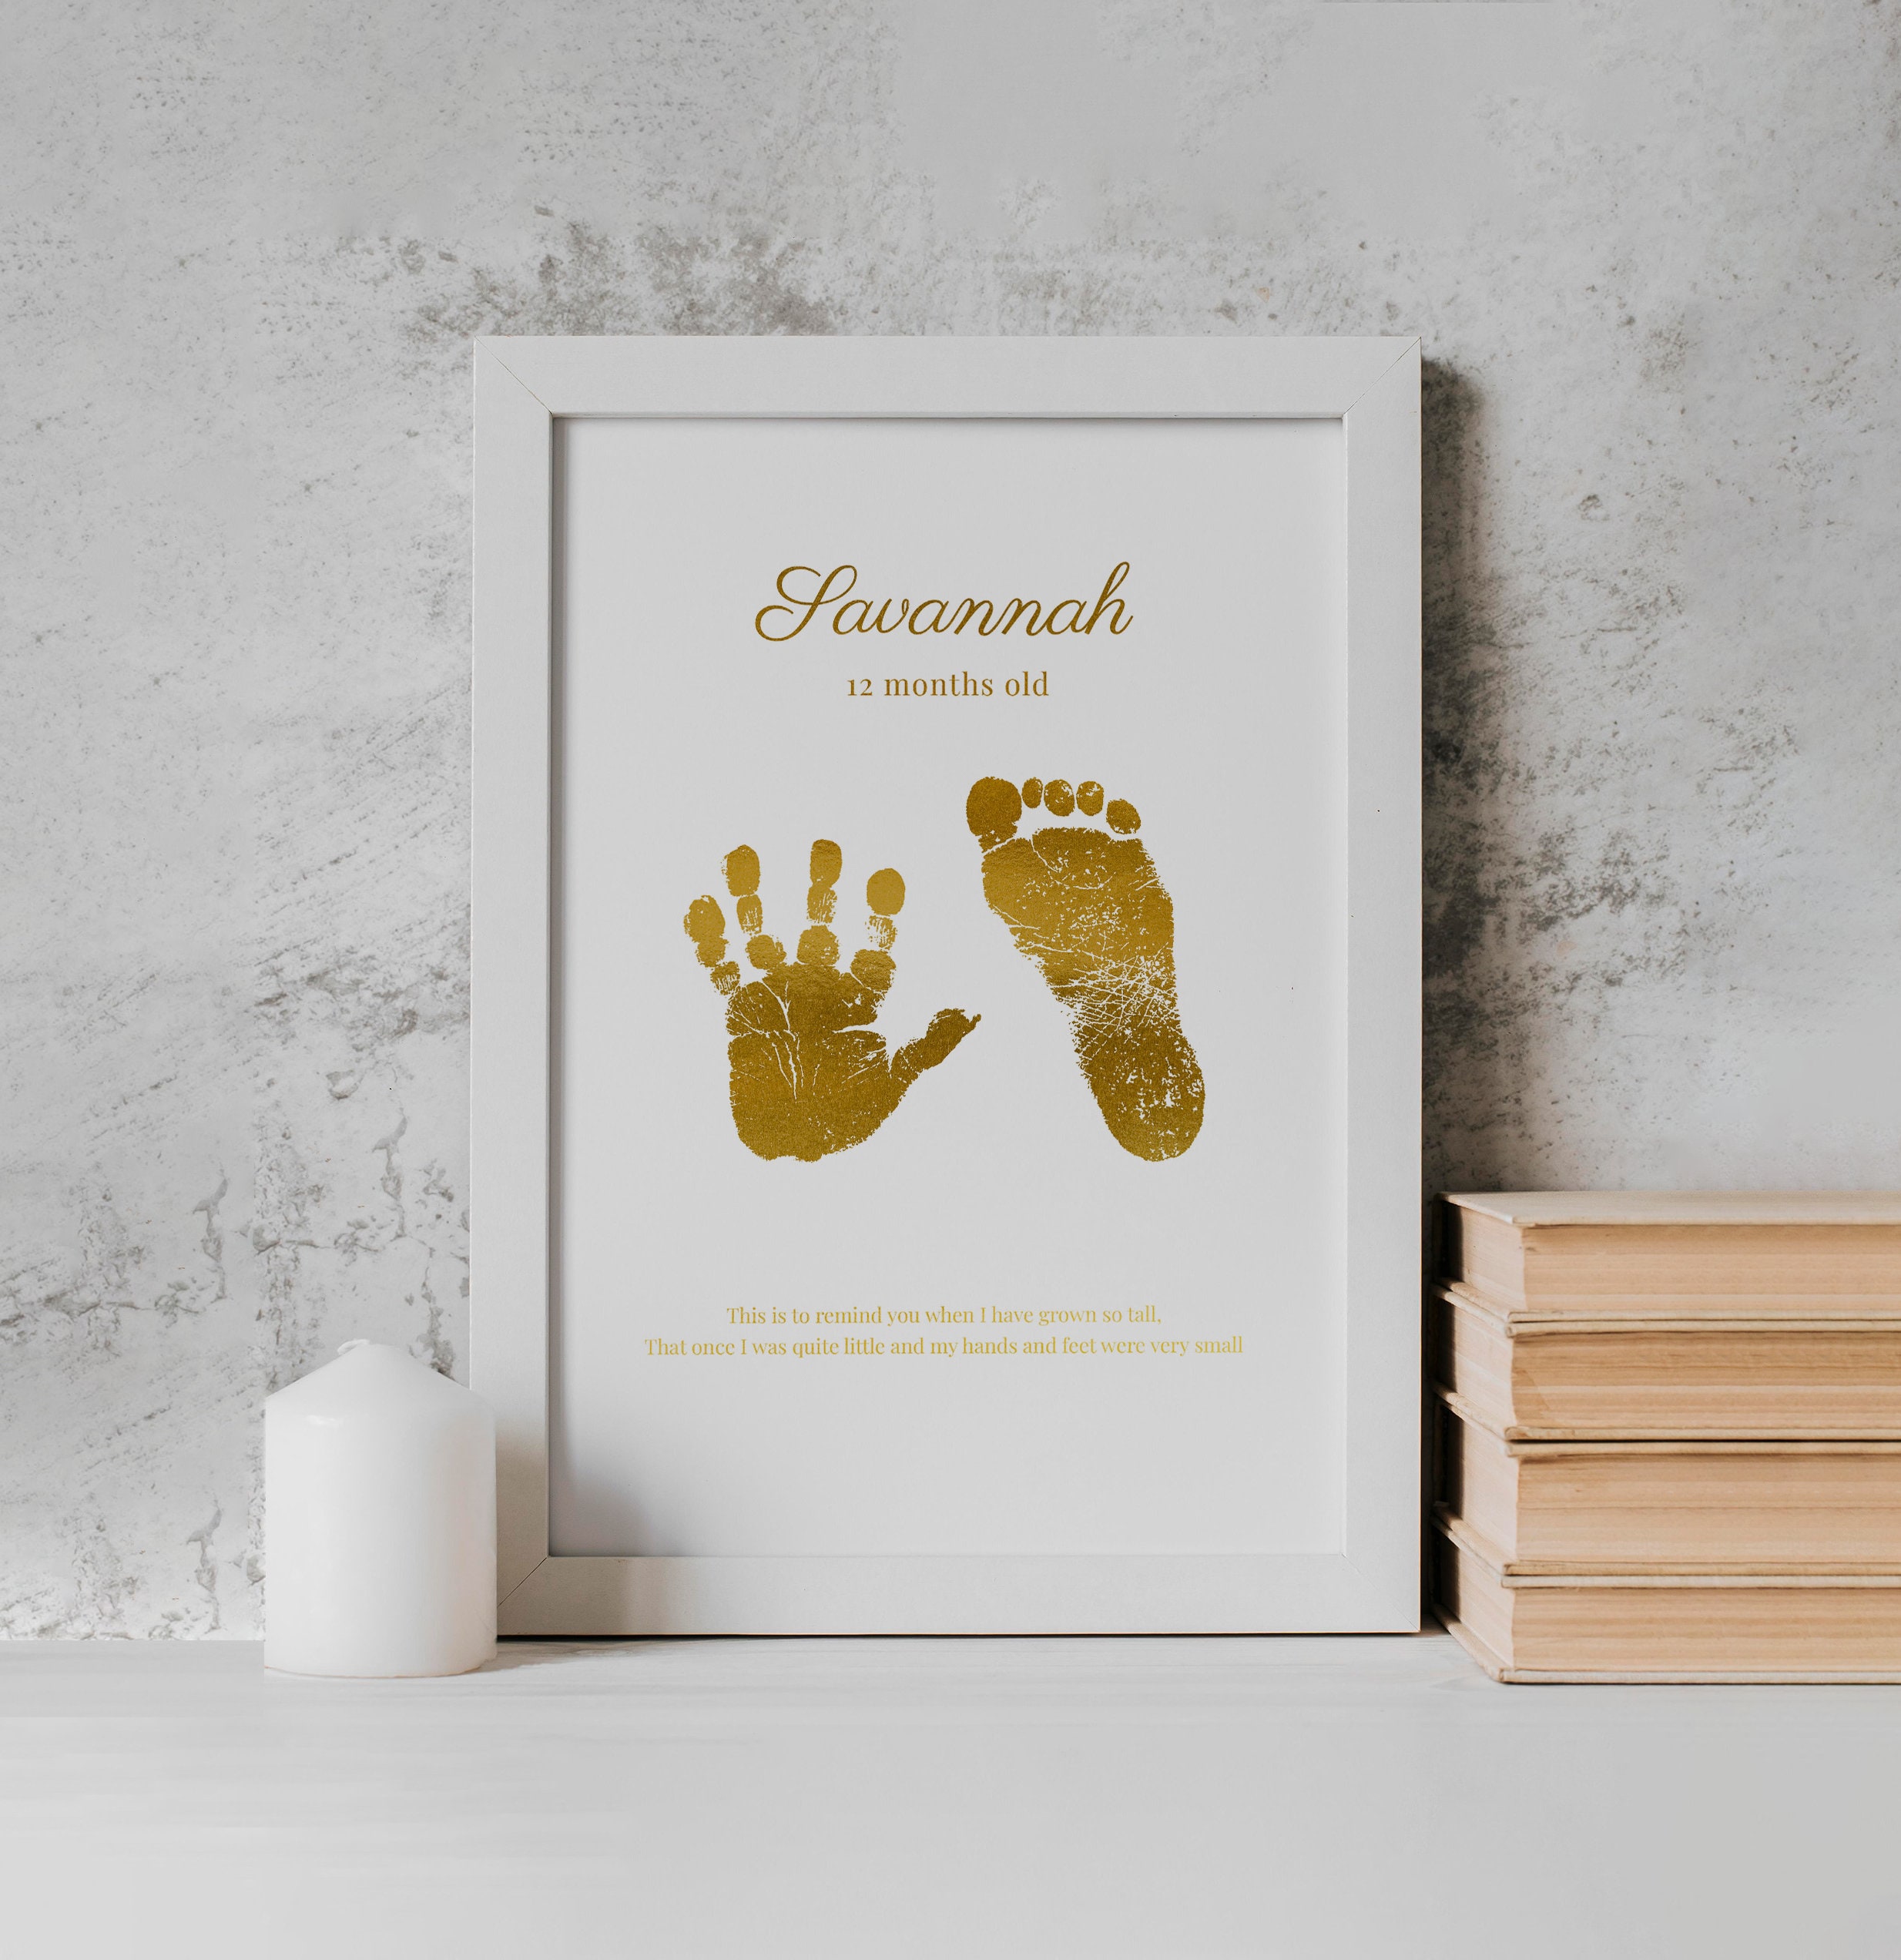 Baby Keepsake Book Boy Footprint Handprint Ink Pad photo albums